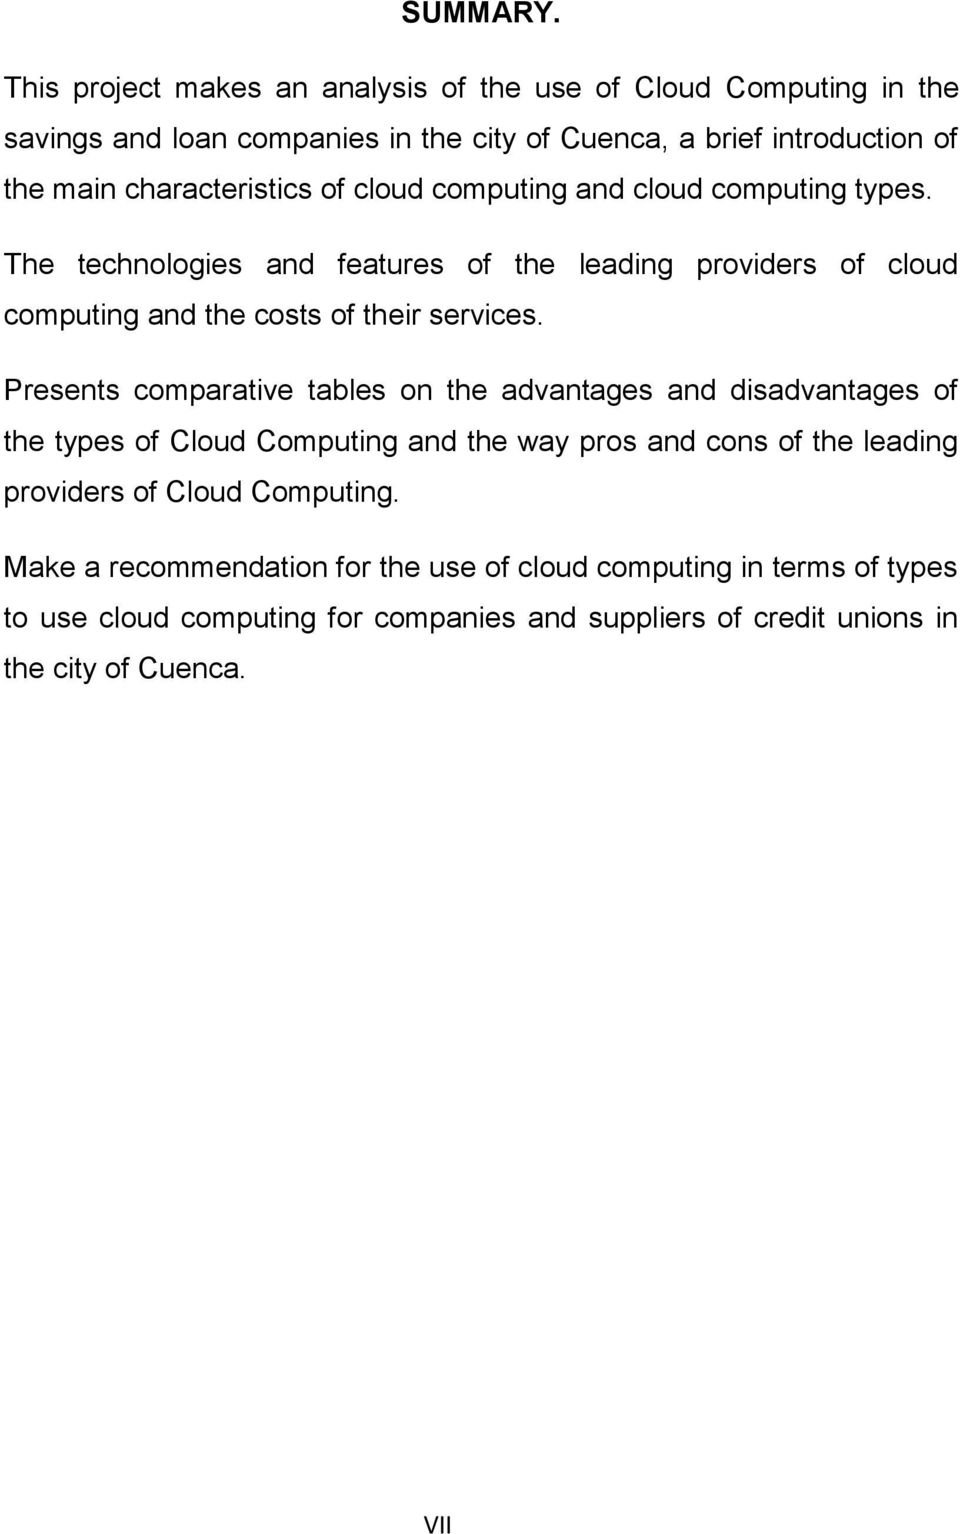 characteristics of cloud computing and cloud computing types.